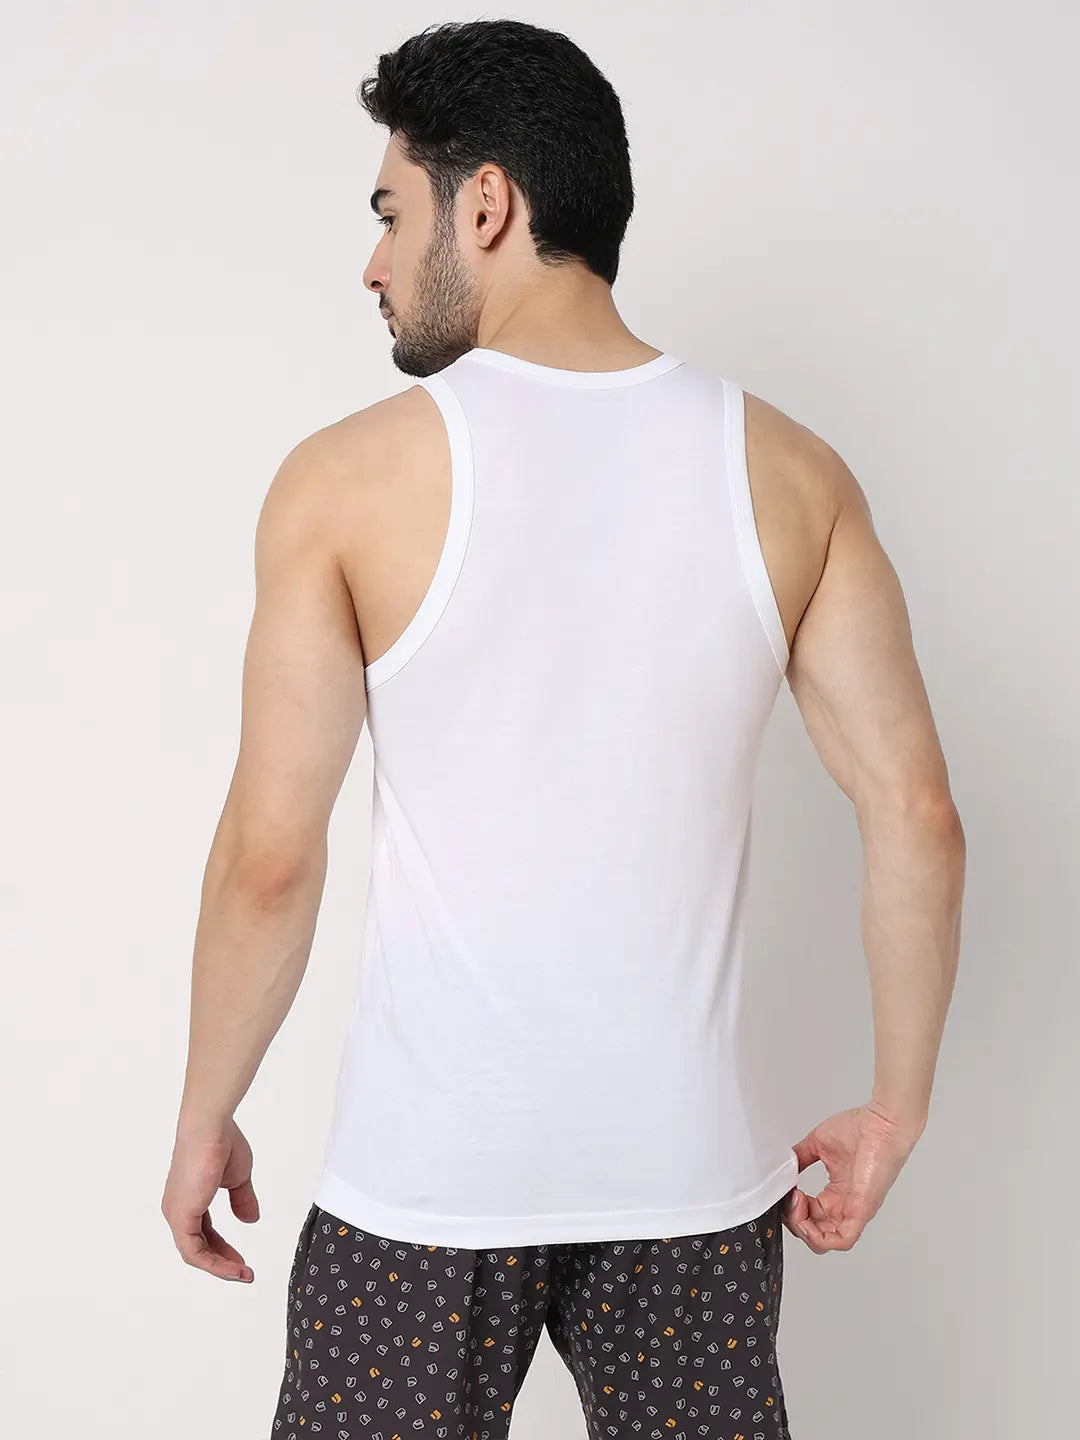 Underjeans by Spykar Men Premium White Cotton Blend Regular Fit Vest - Pack Of 2